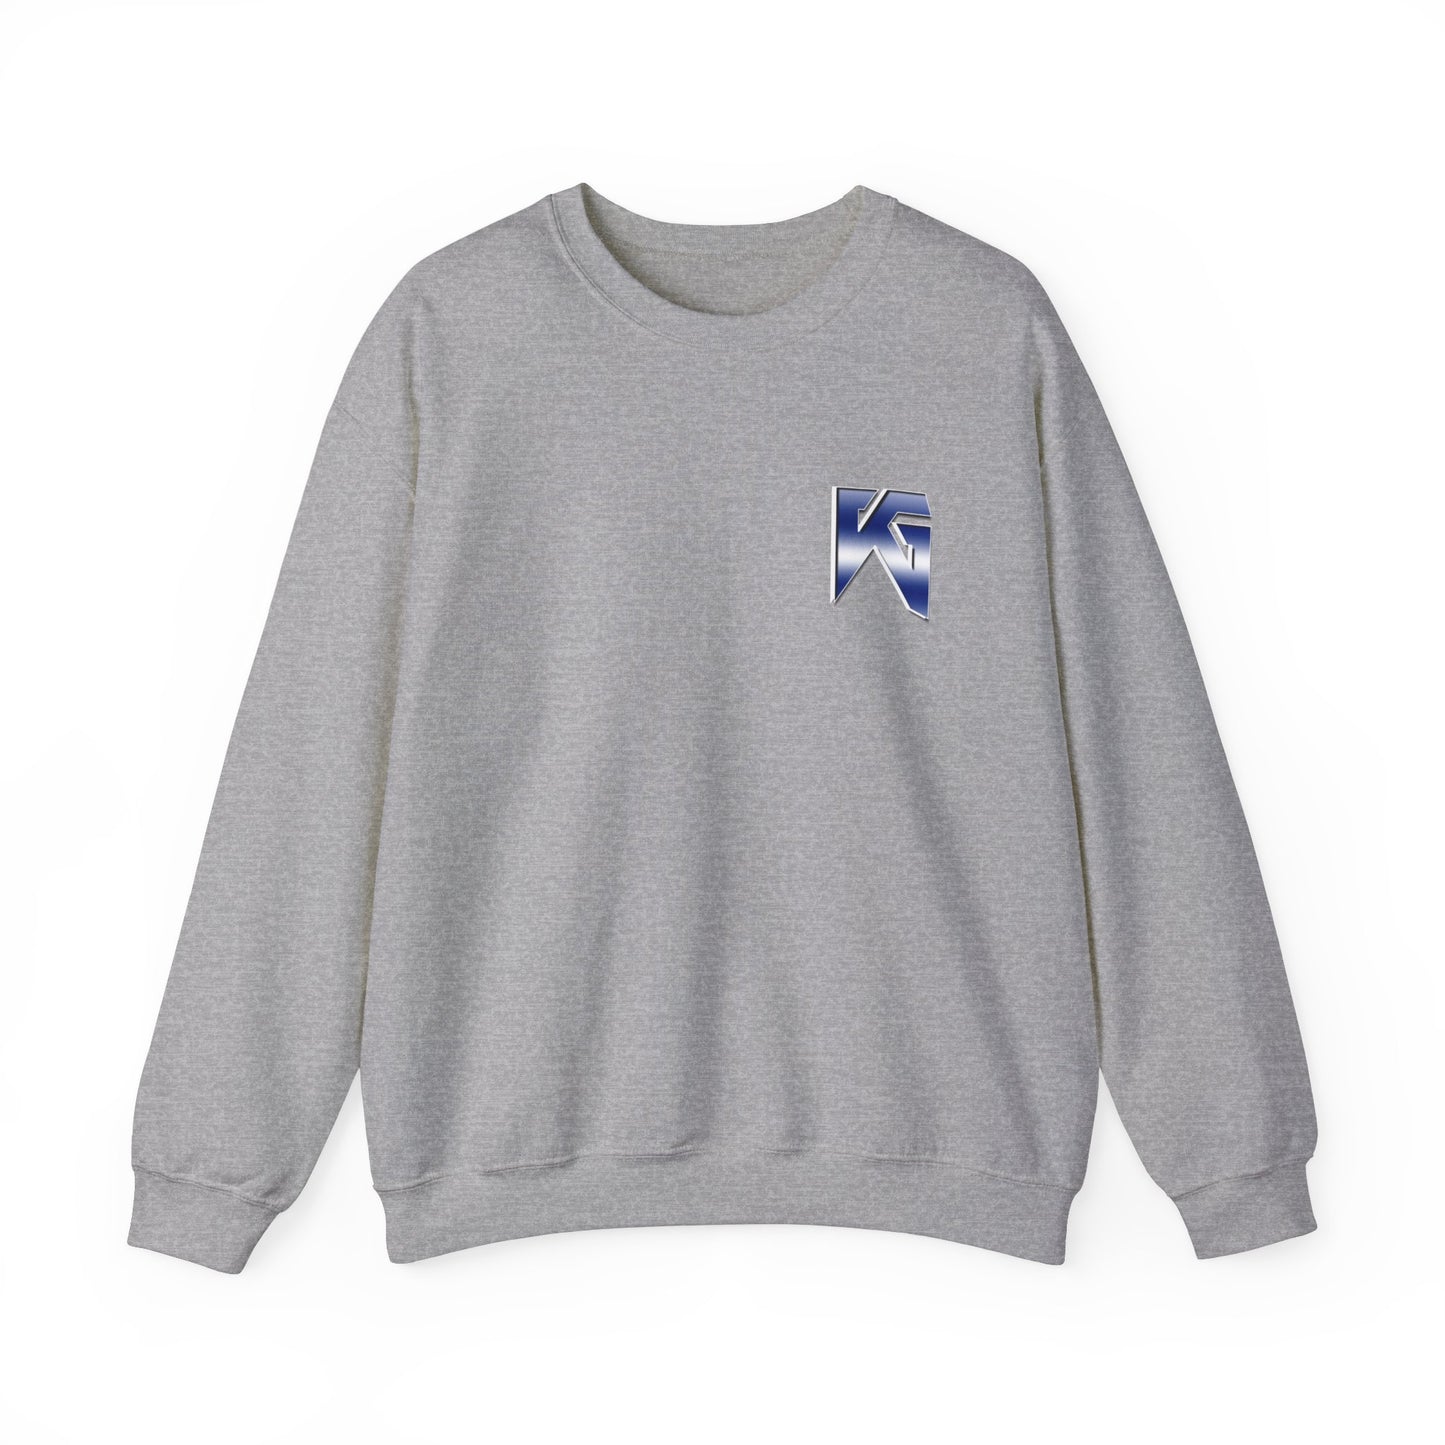 KG Crewneck Sweatshirt